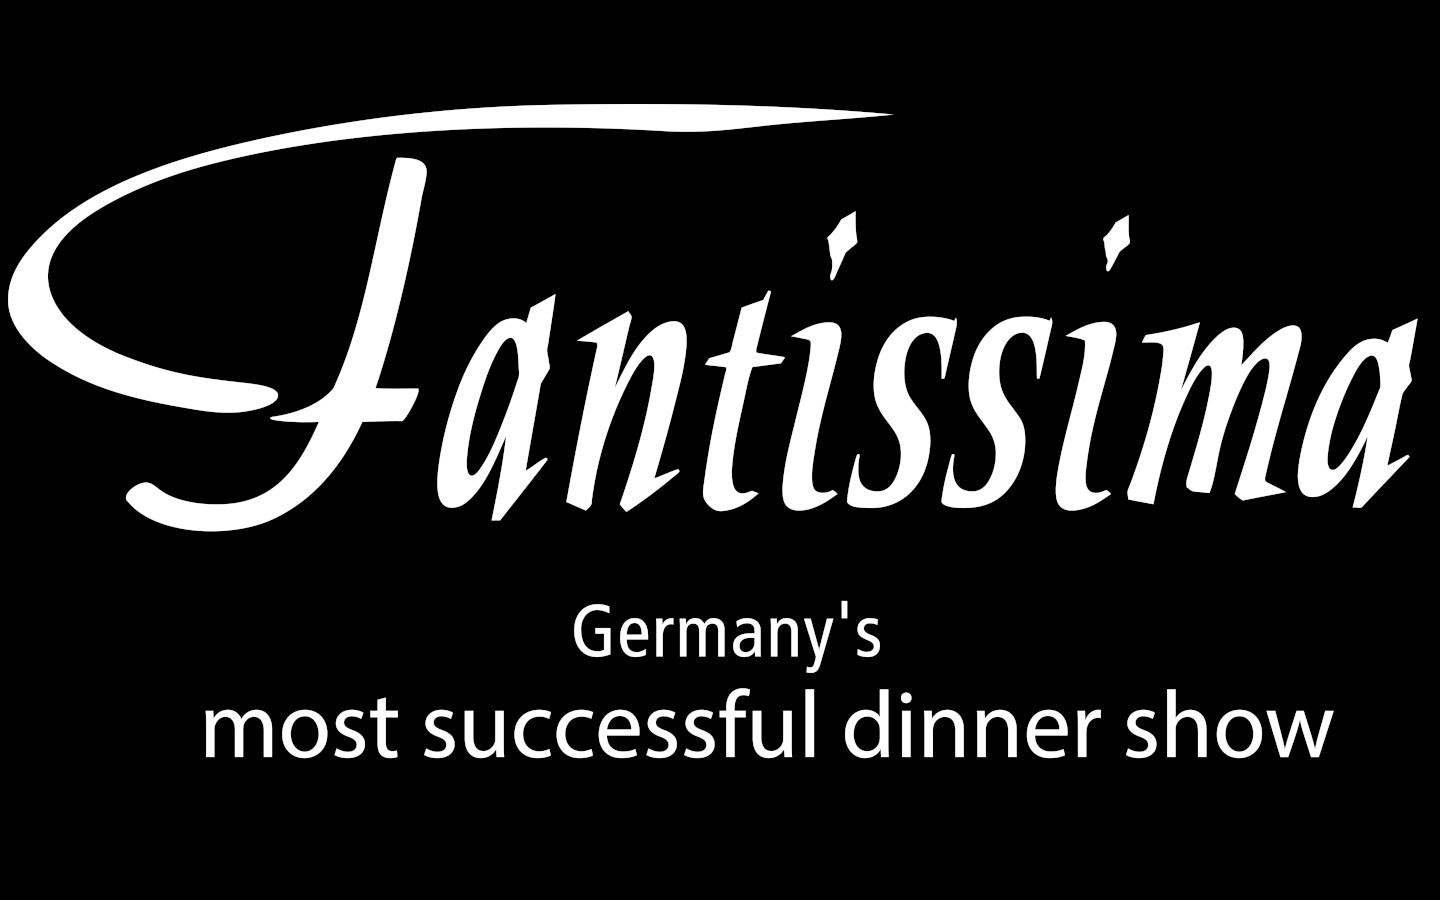 Download Fantissima_logo_germanys_most_successful_dinnershow.zip